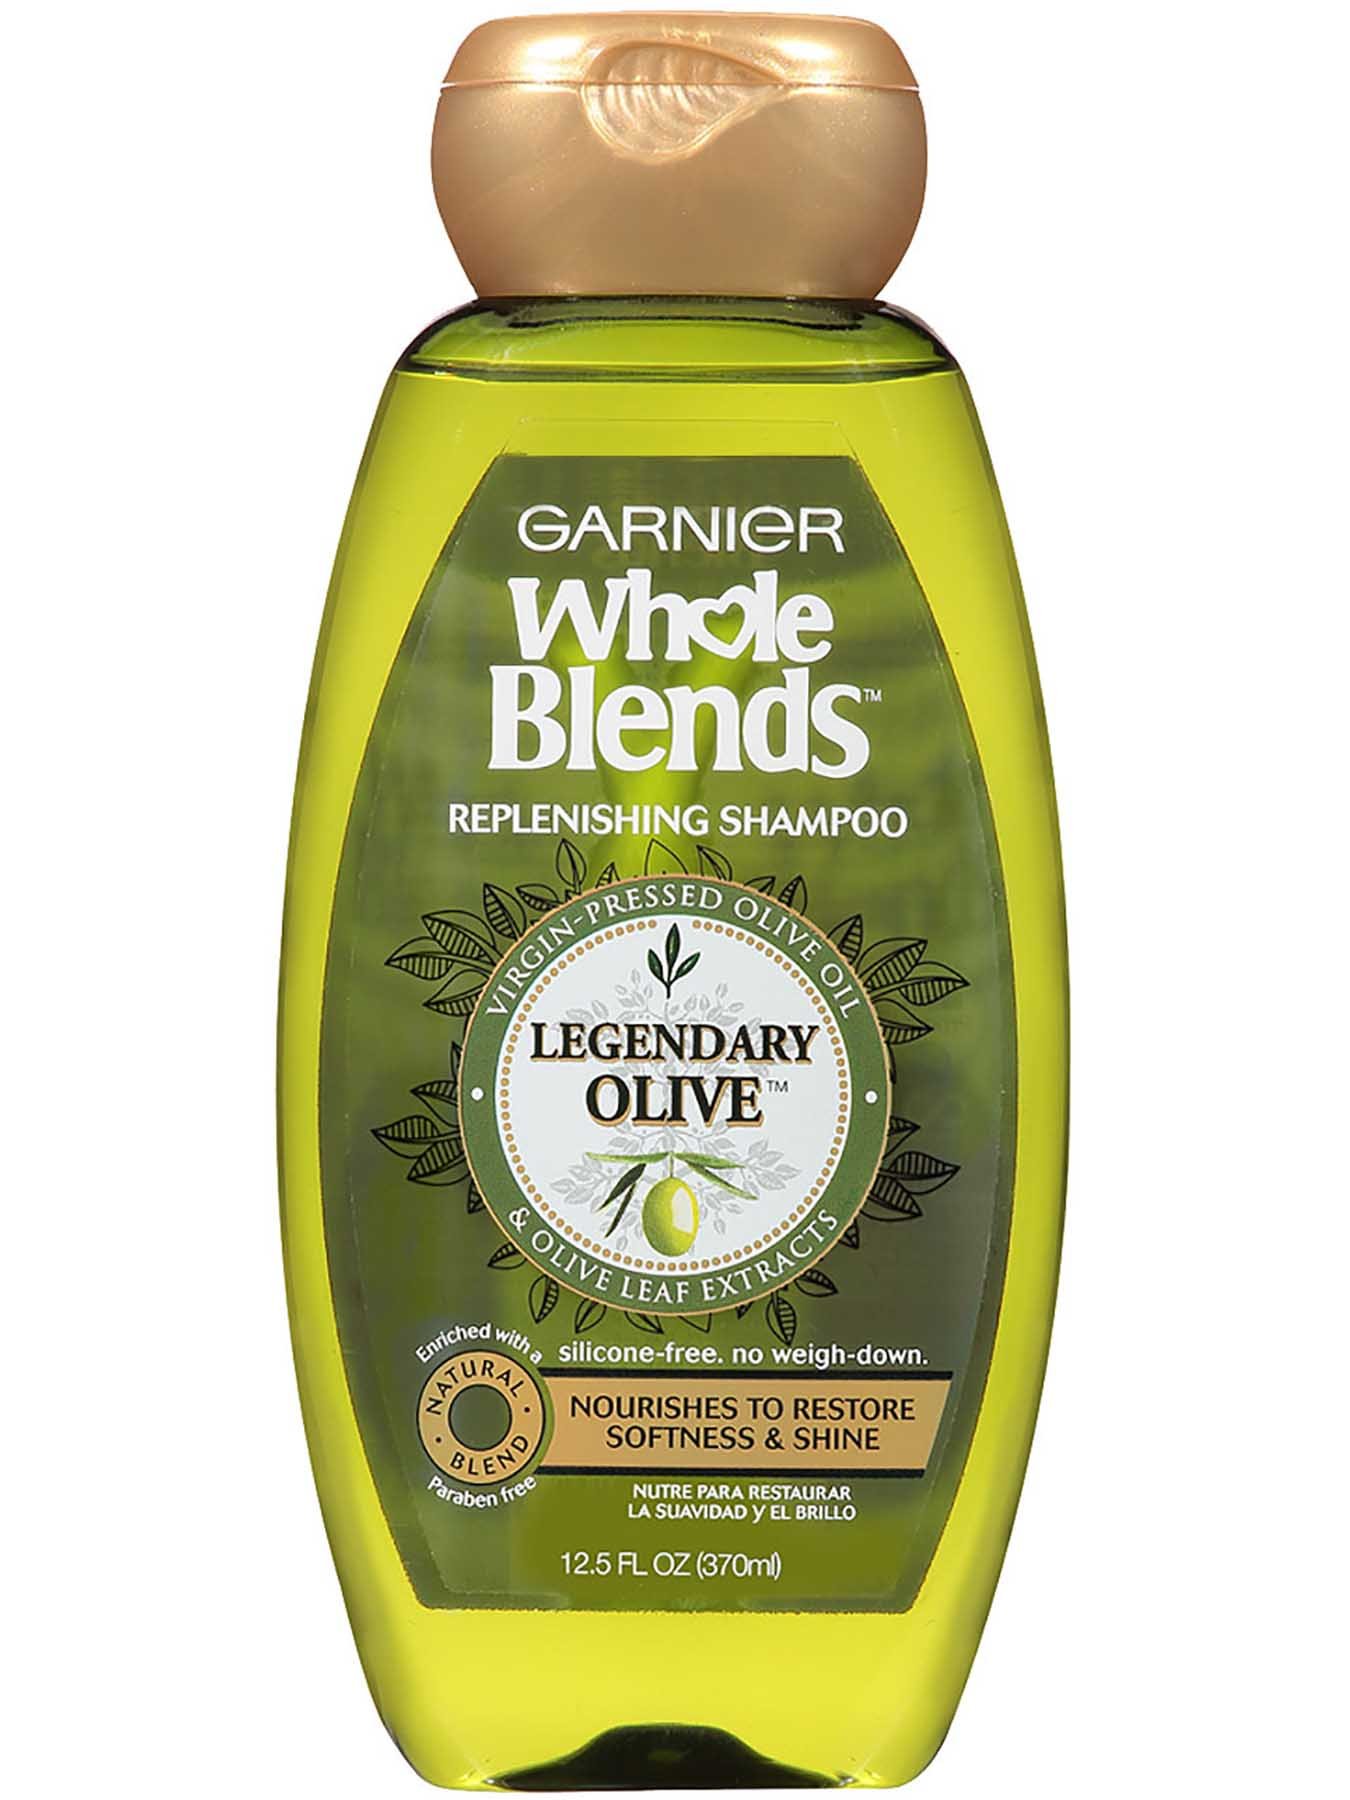 Whole Blends Legendary Olive Shampoo